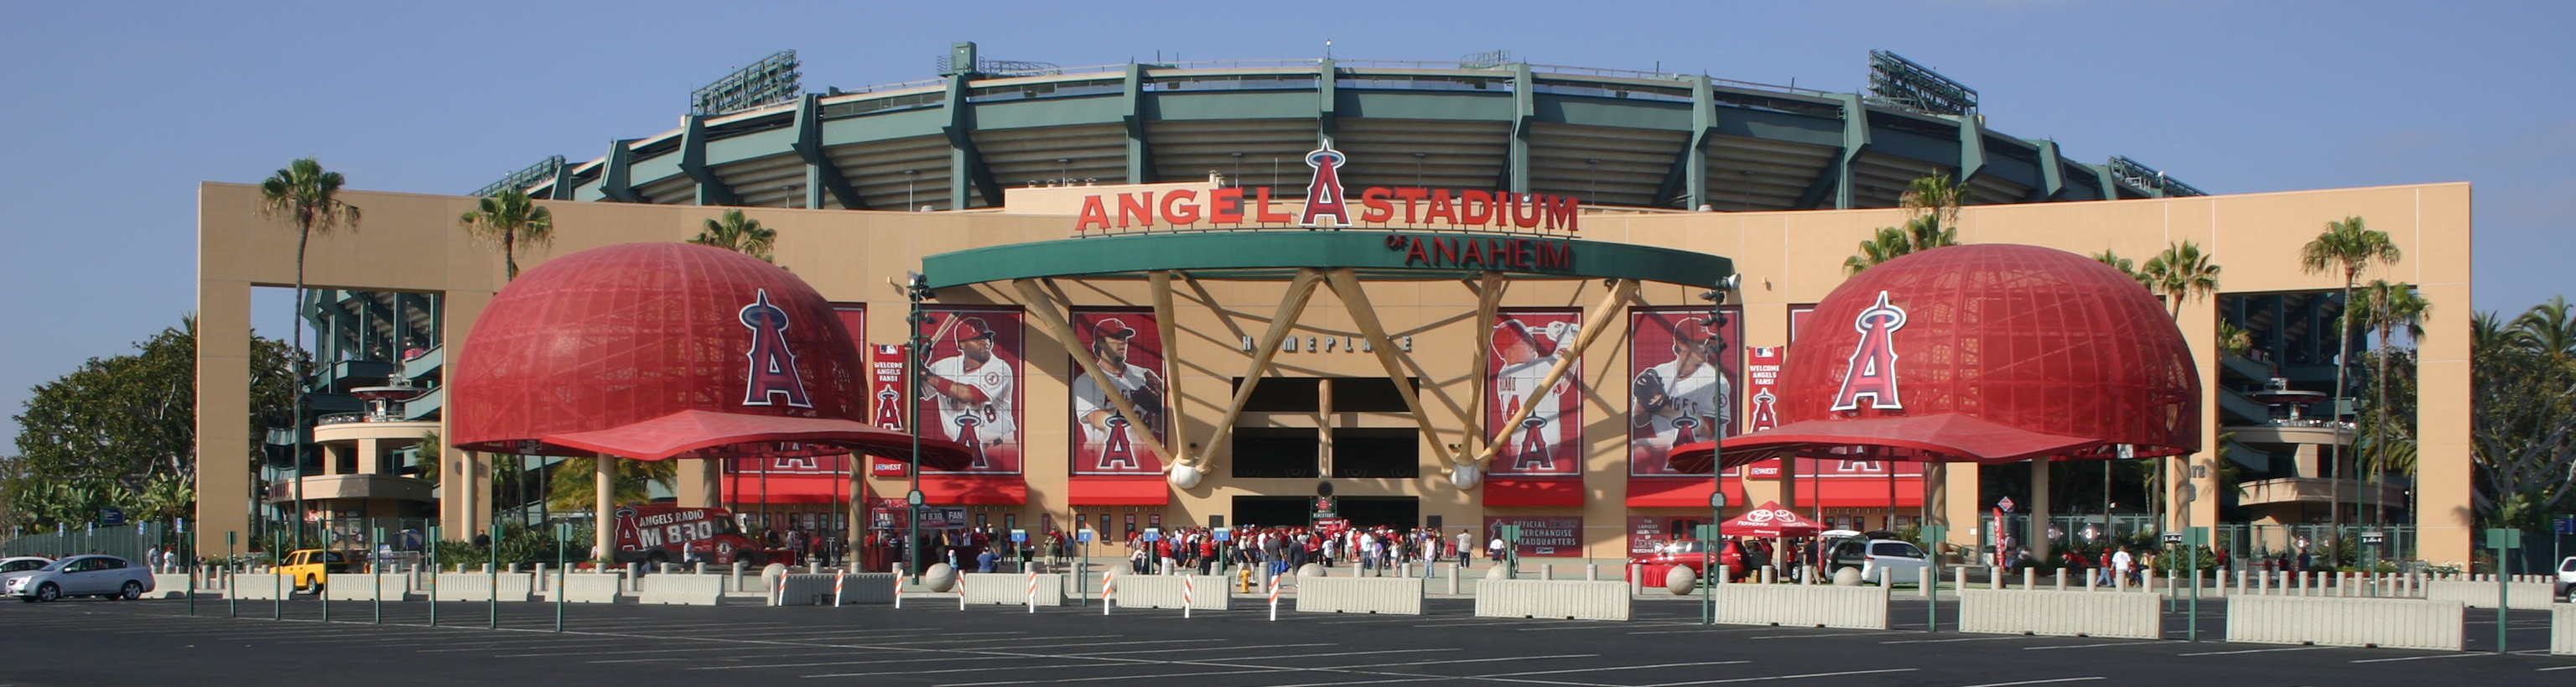 Angel_Stadium_Entrance.jpg